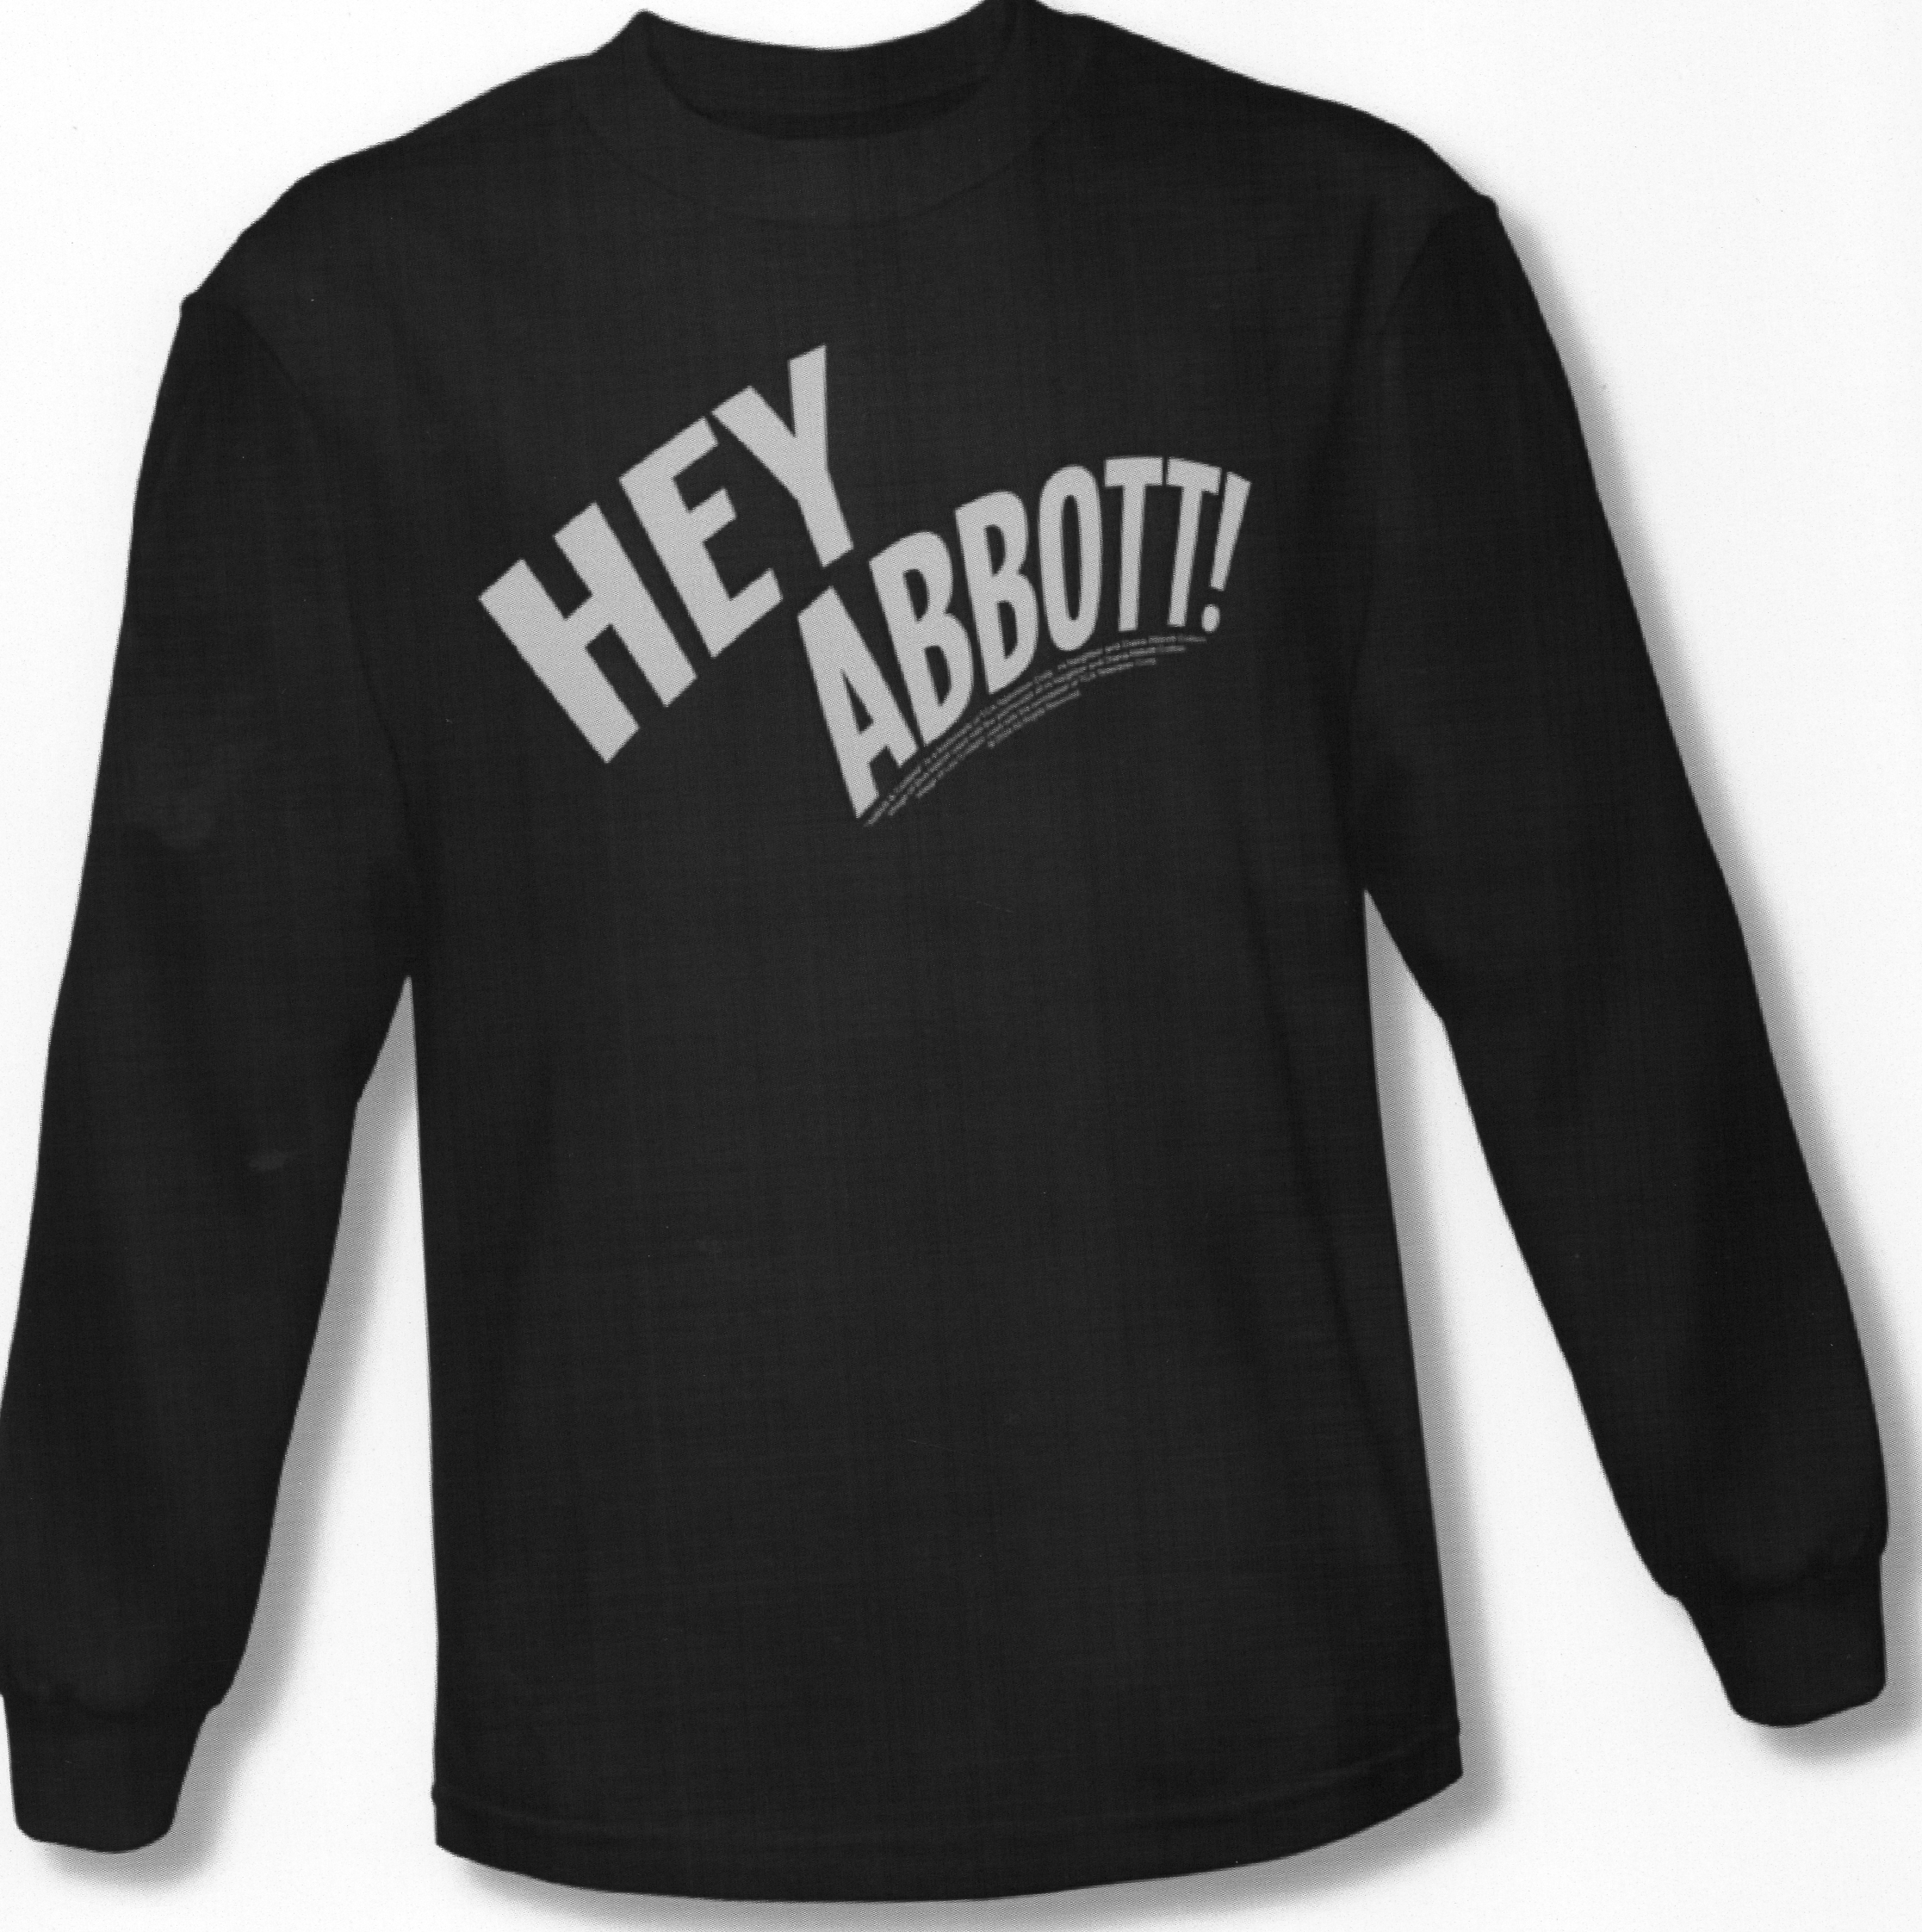 Hey, Abbott! Long Sleeve Tee - Click Image to Close